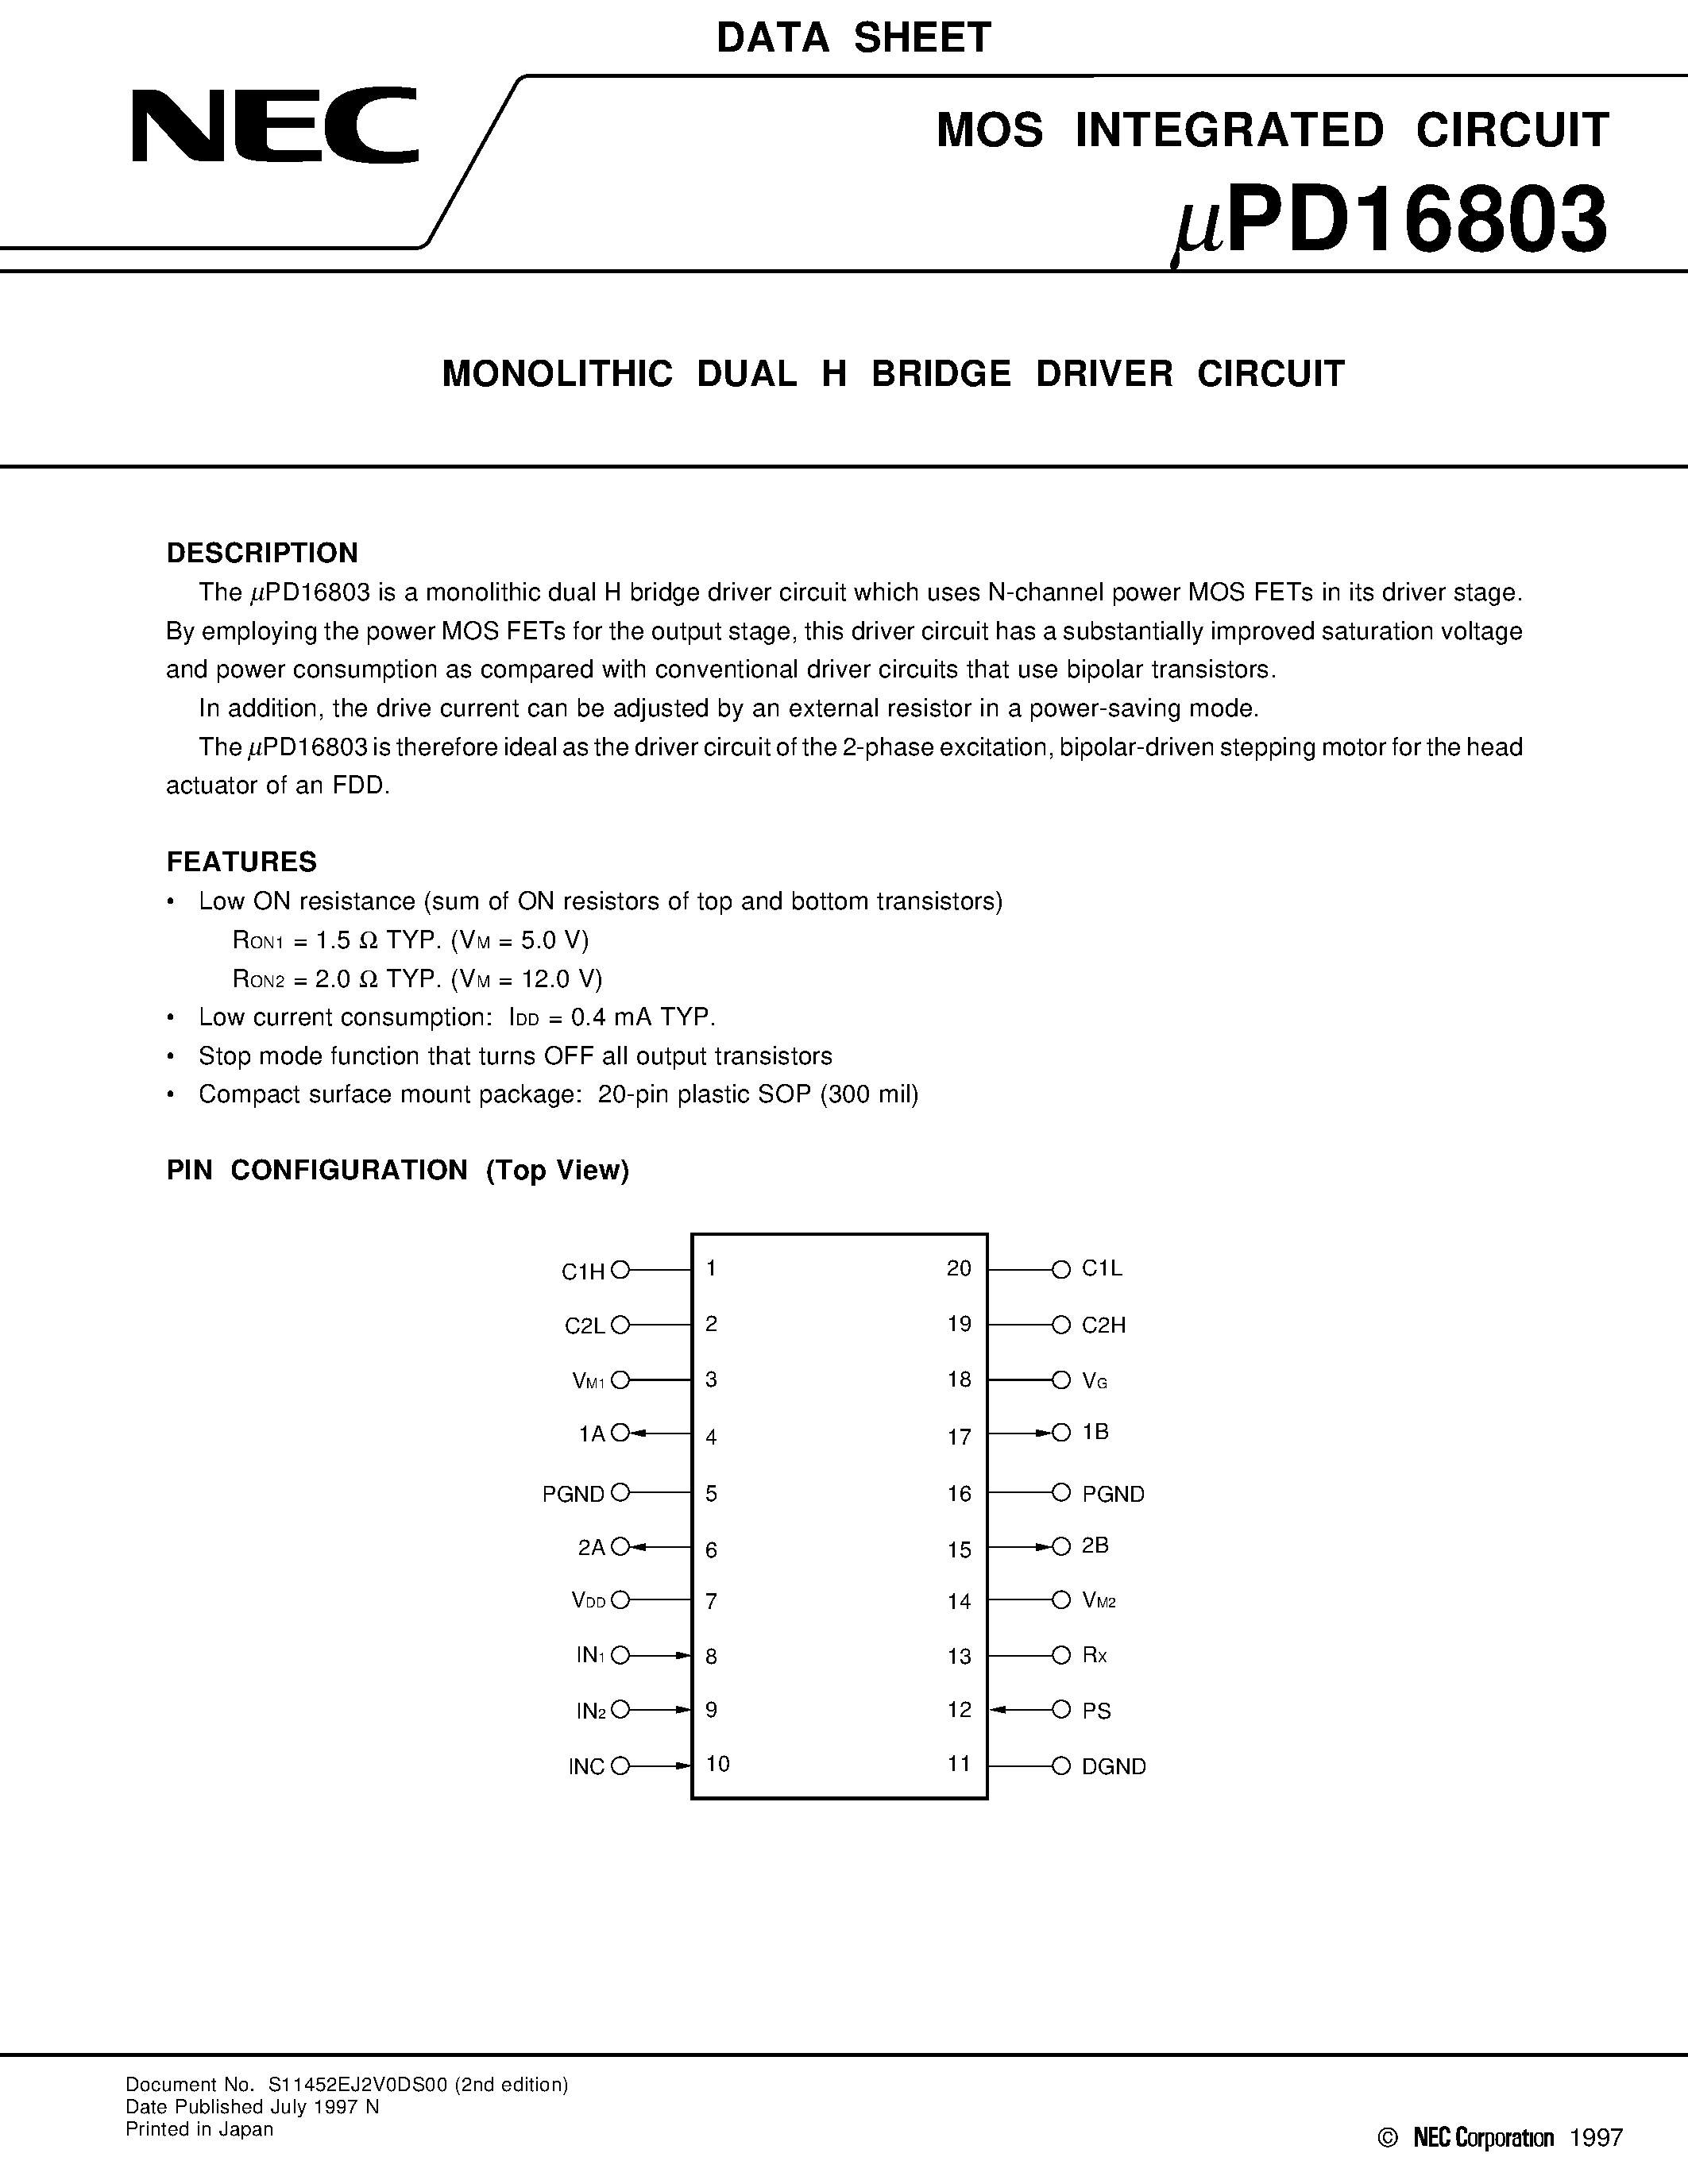 Datasheet UPD16803GS - MONOLITHIC DUAL H BRIDGE DRIVER CIRCUIT page 1